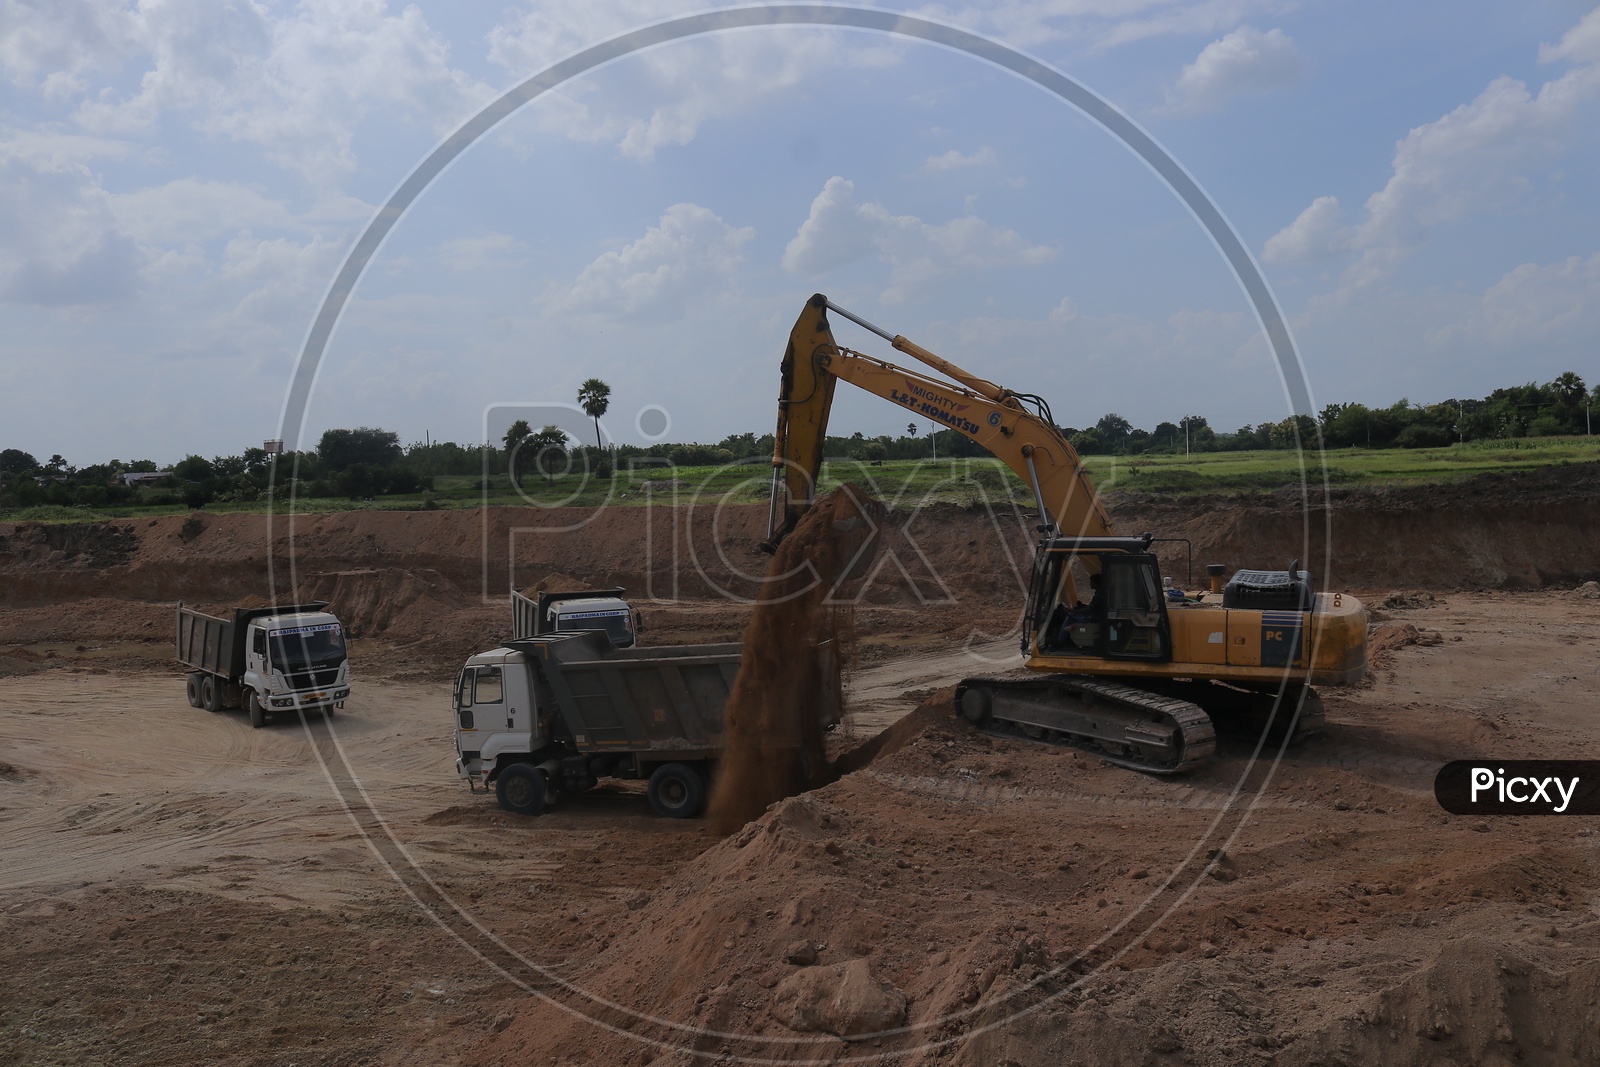 Kaleshwaram Lift Irrigation Project is an under-construction multi-purpose irrigation project on the Godavari River